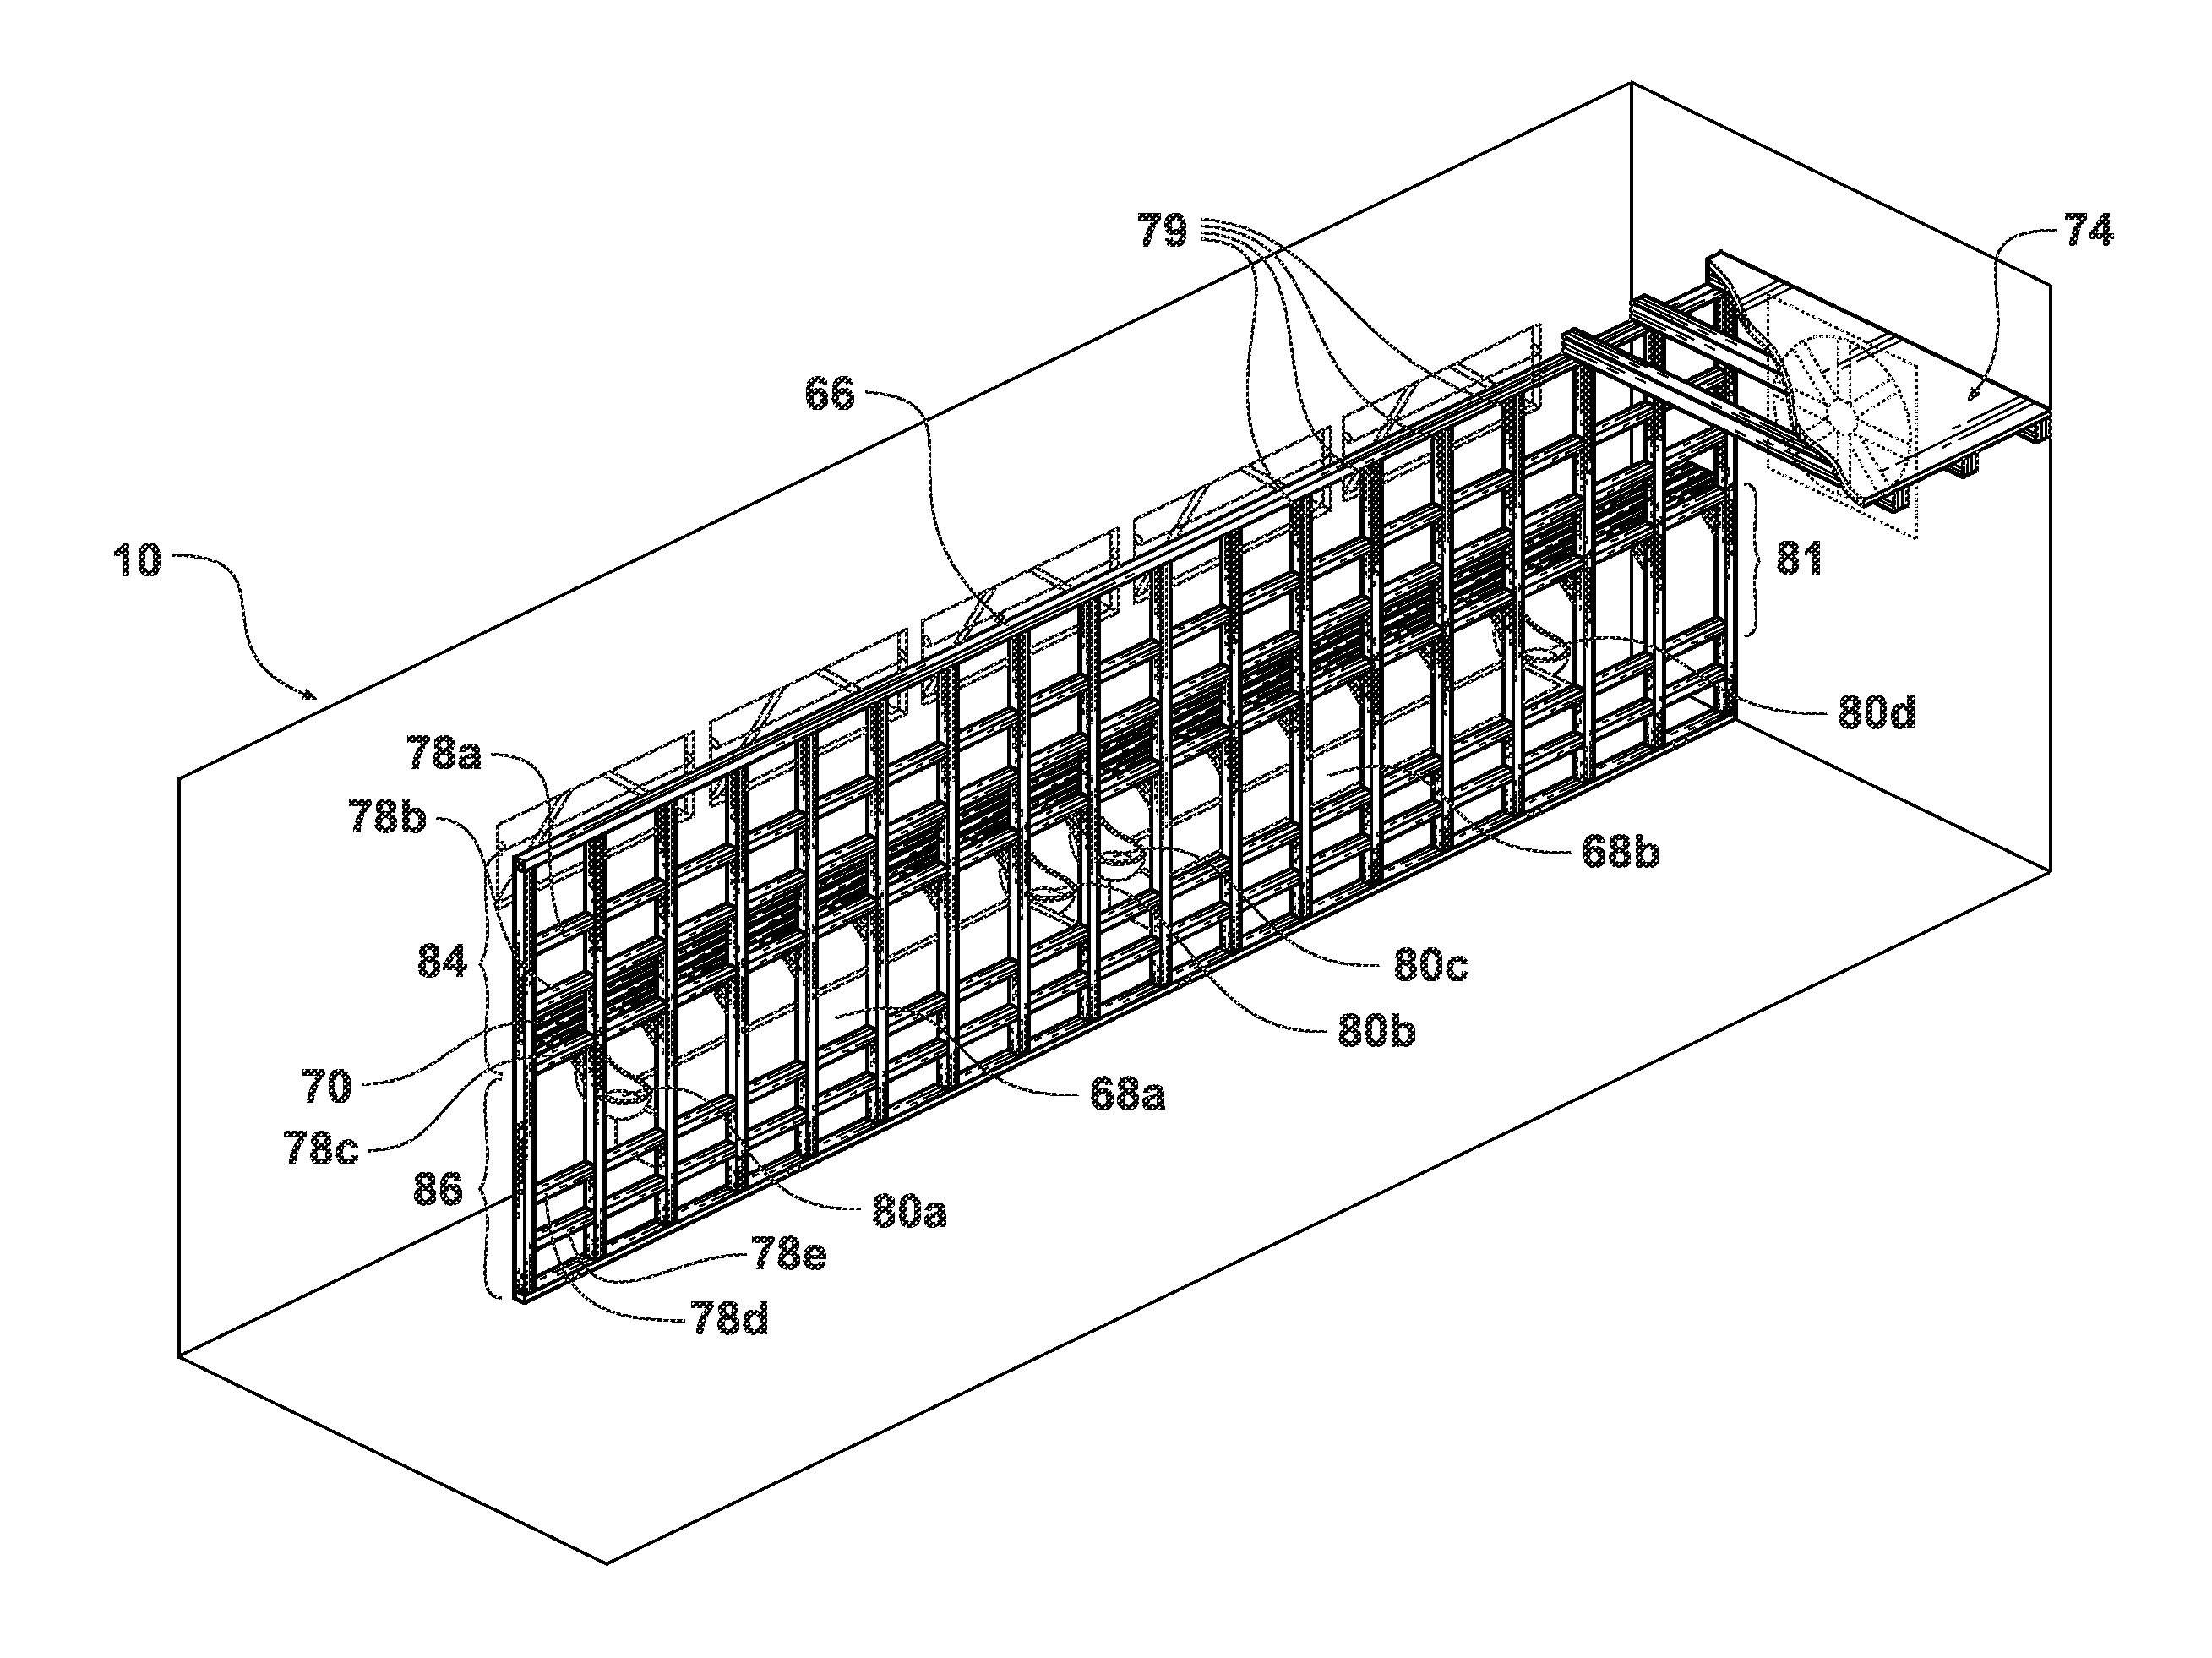 Method of shipping livestock